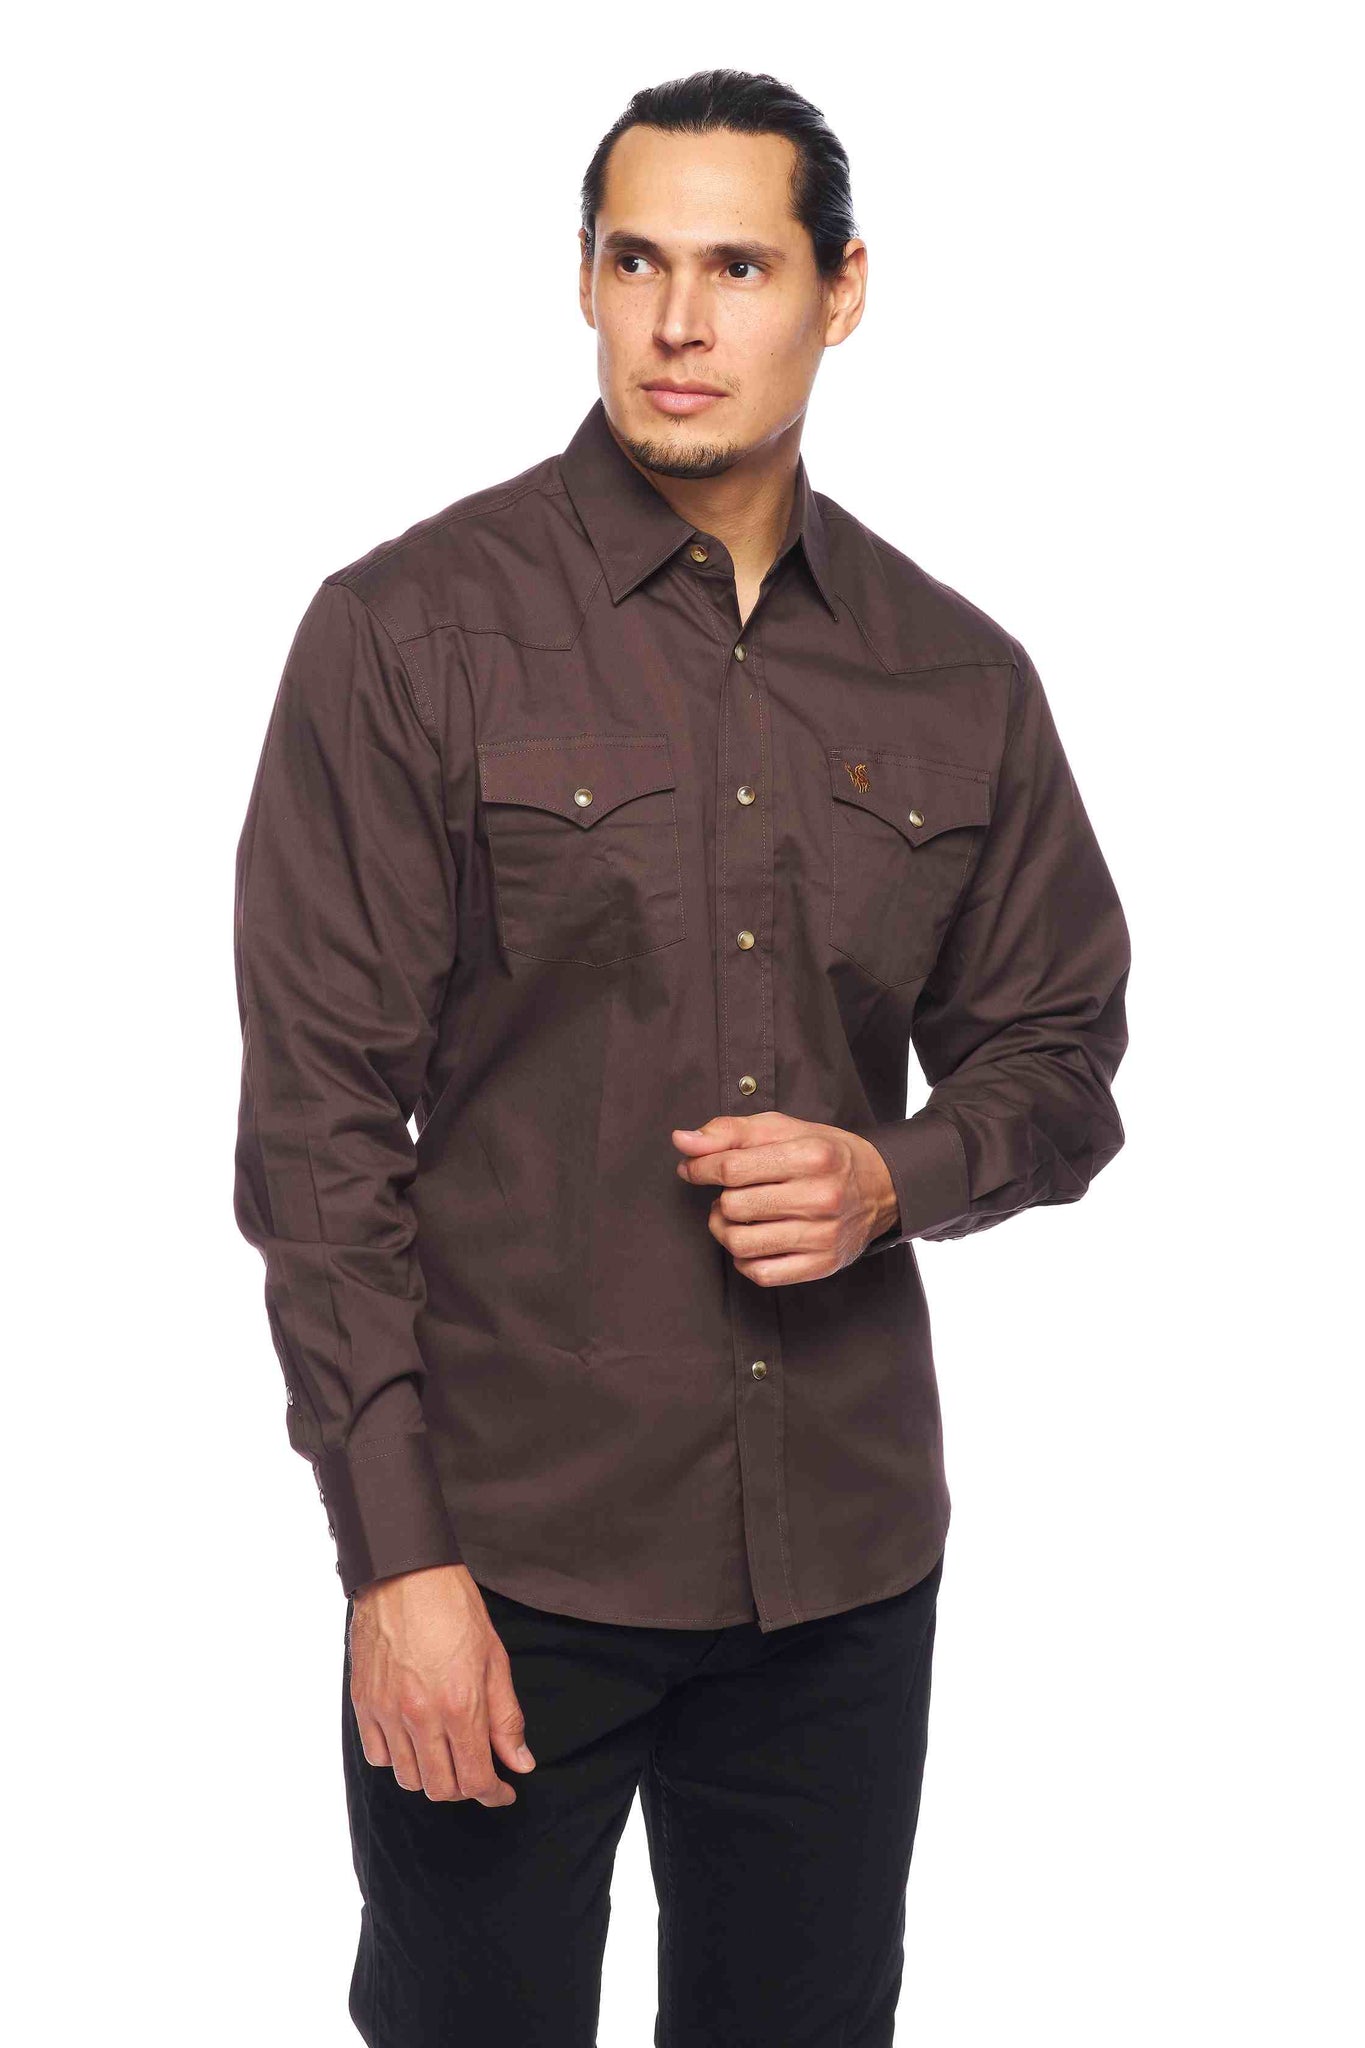 Men's Western Solid Twill Shirt-BURGUNDY